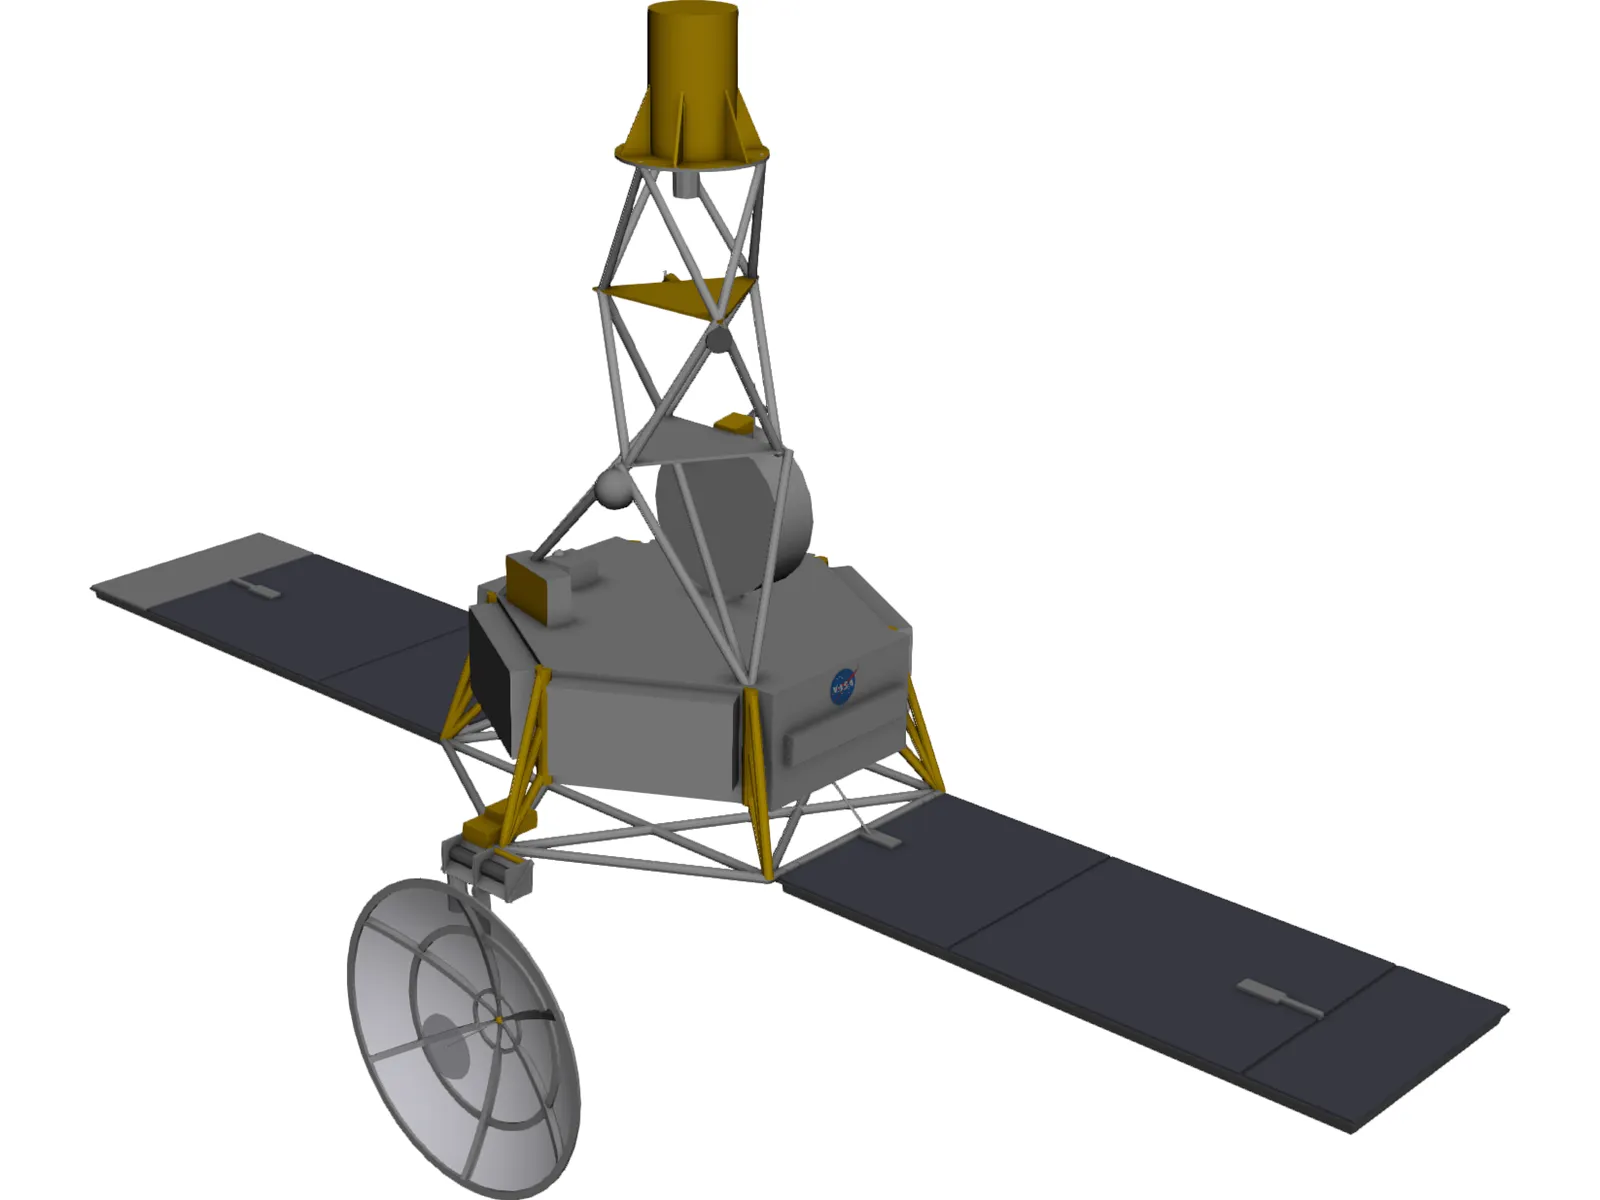 Mariner 2 3D Model